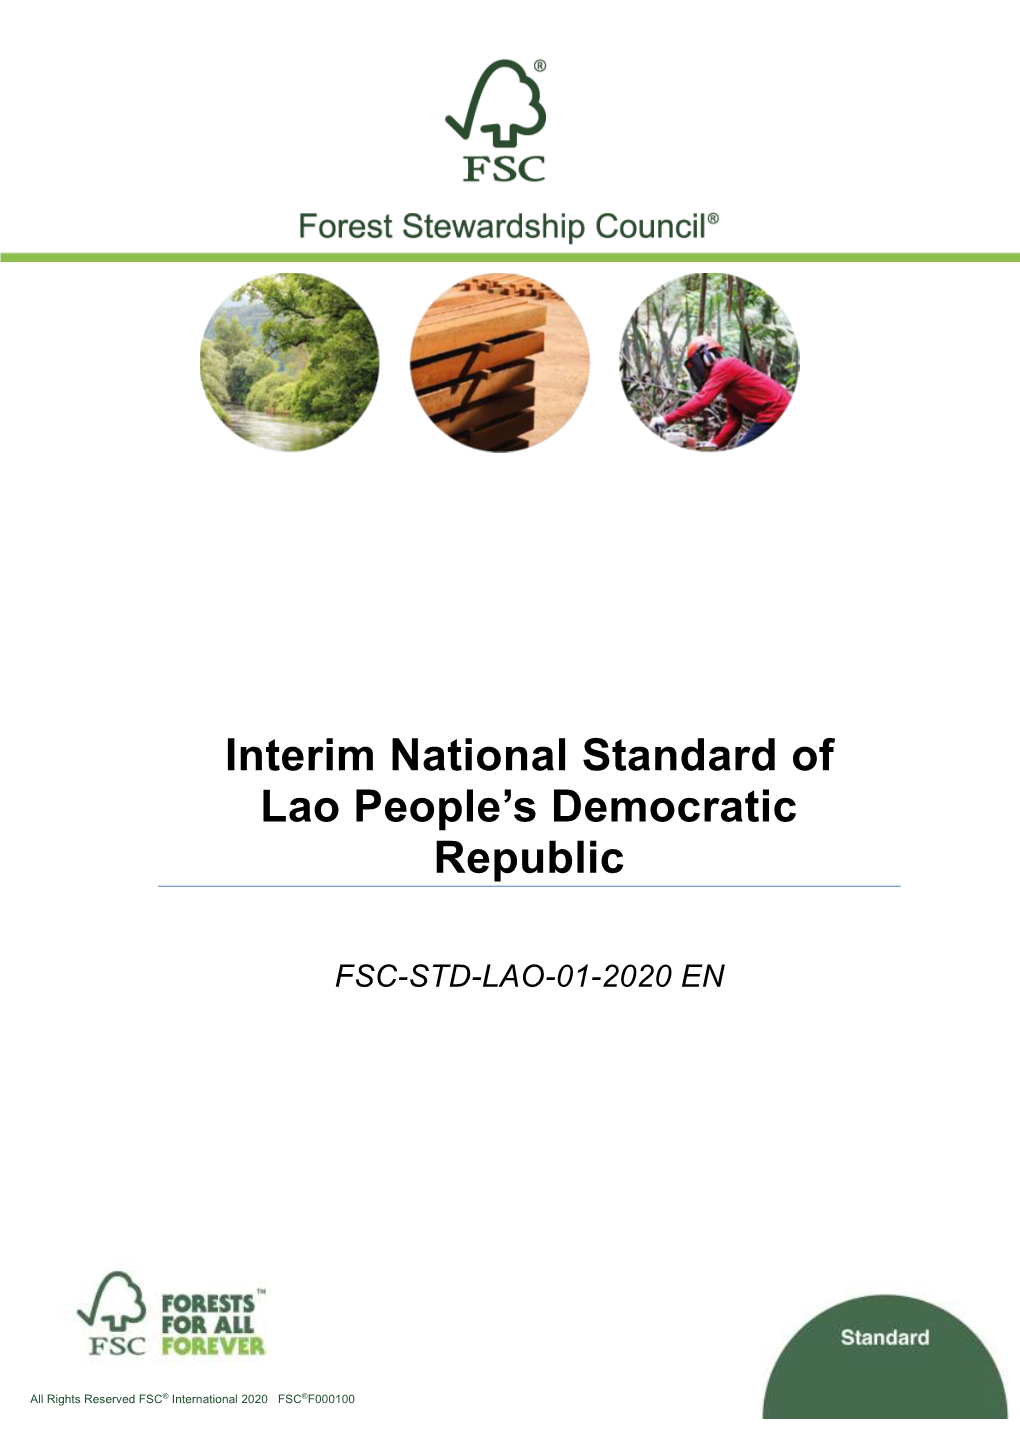 Interim National Standard of Lao People's Democratic Republic